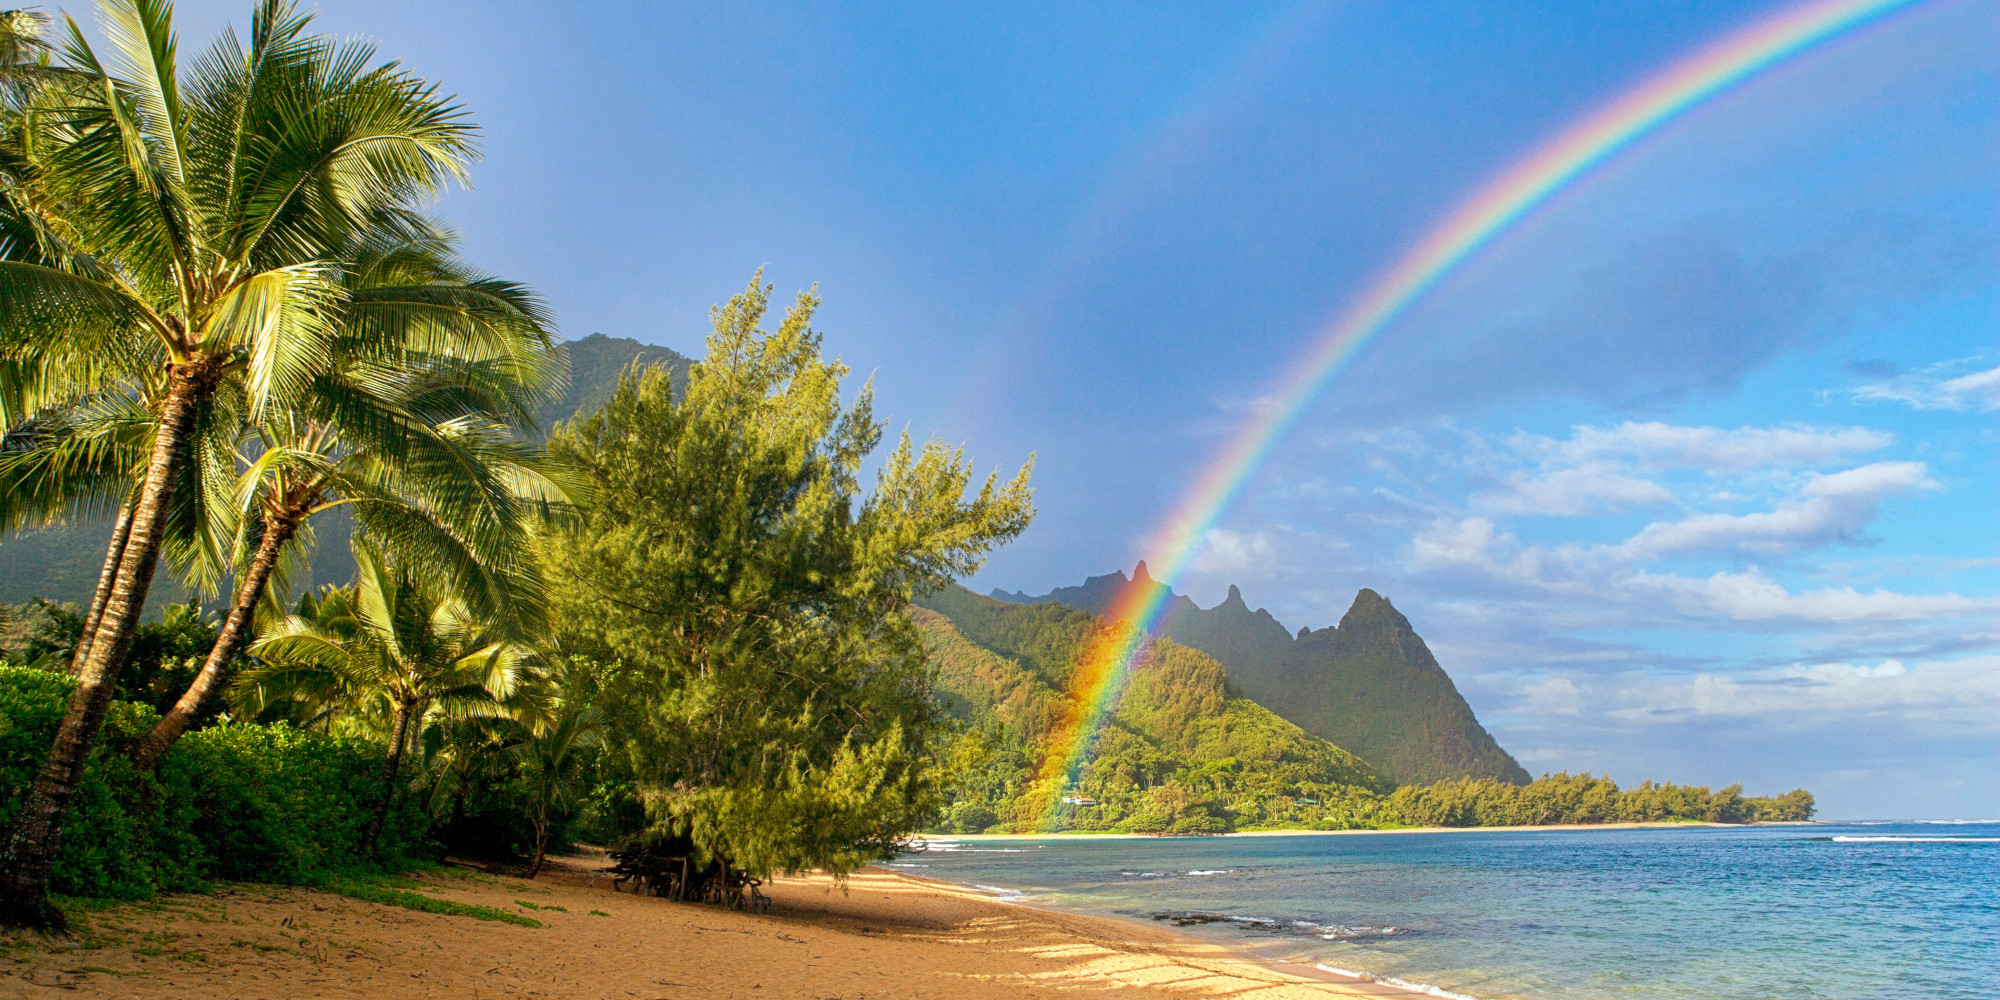 https://viagensdealline.files.wordpress.com/2013/12/o-hawaii-rainbow-facebook.jpg